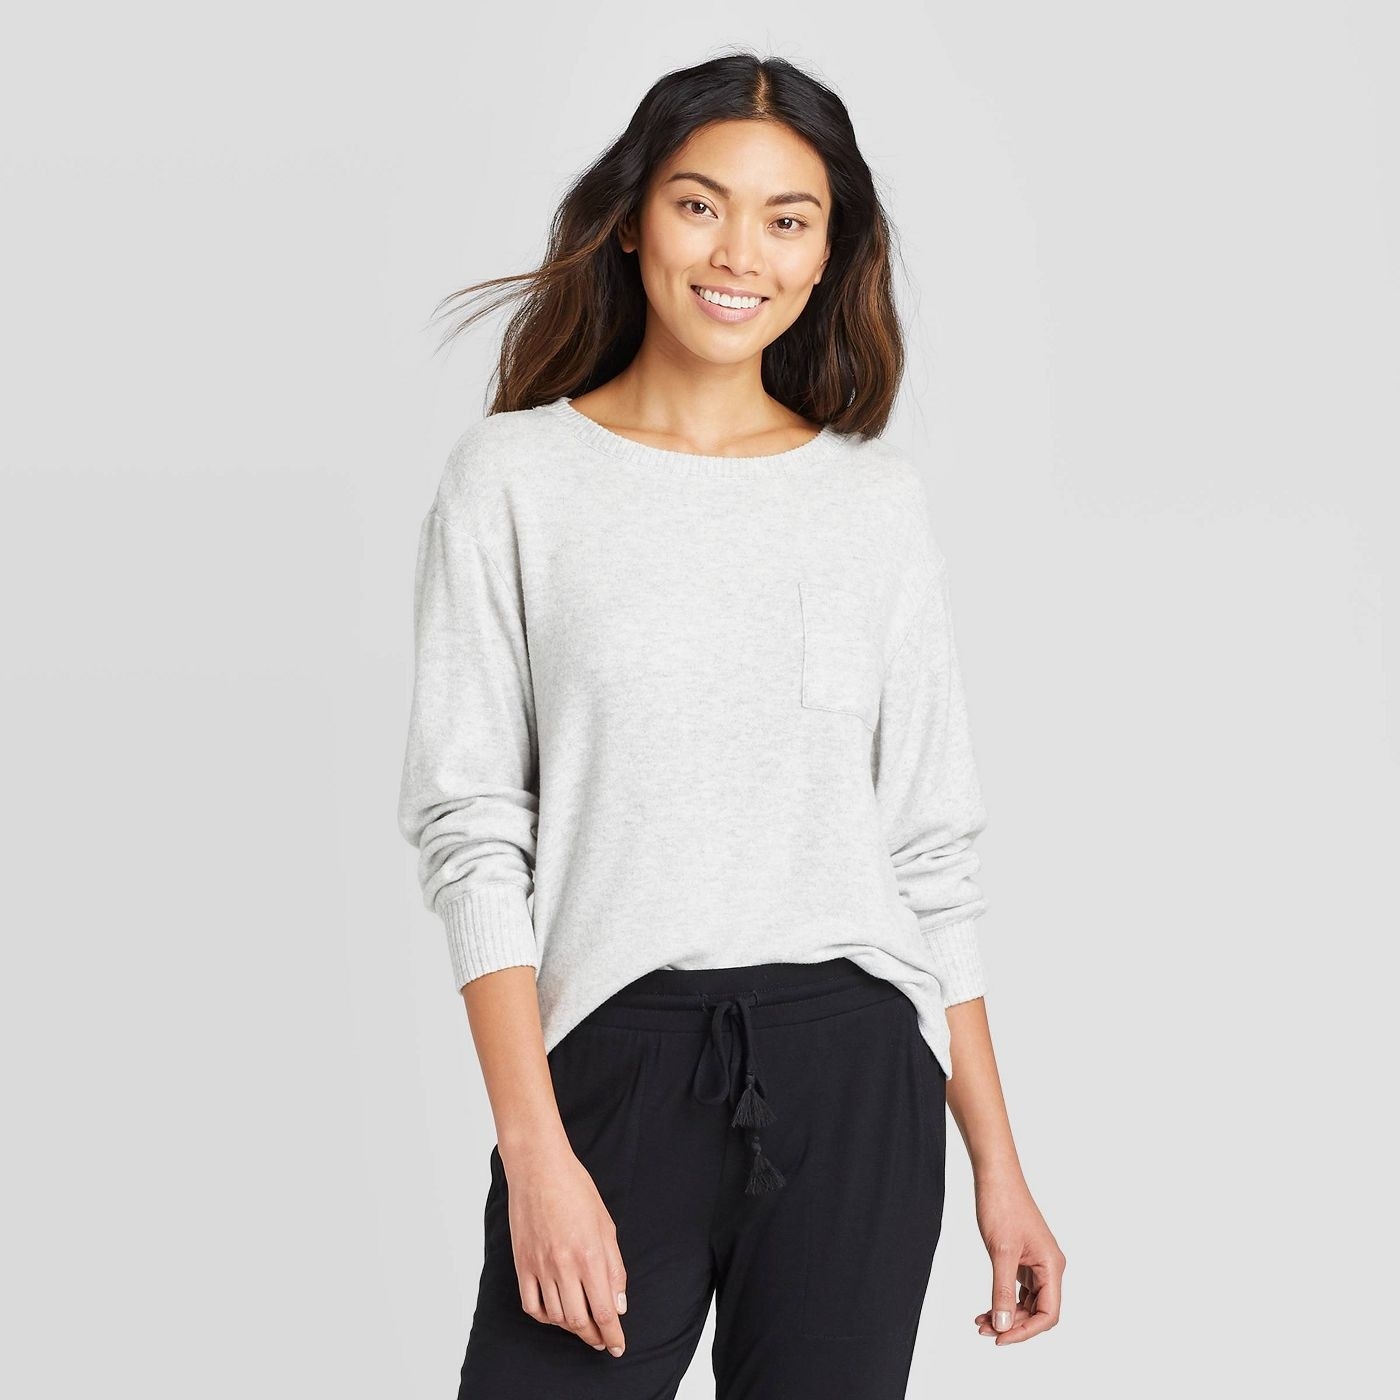 Model wearing the light gray perfectly cozy lounge sweatshirt